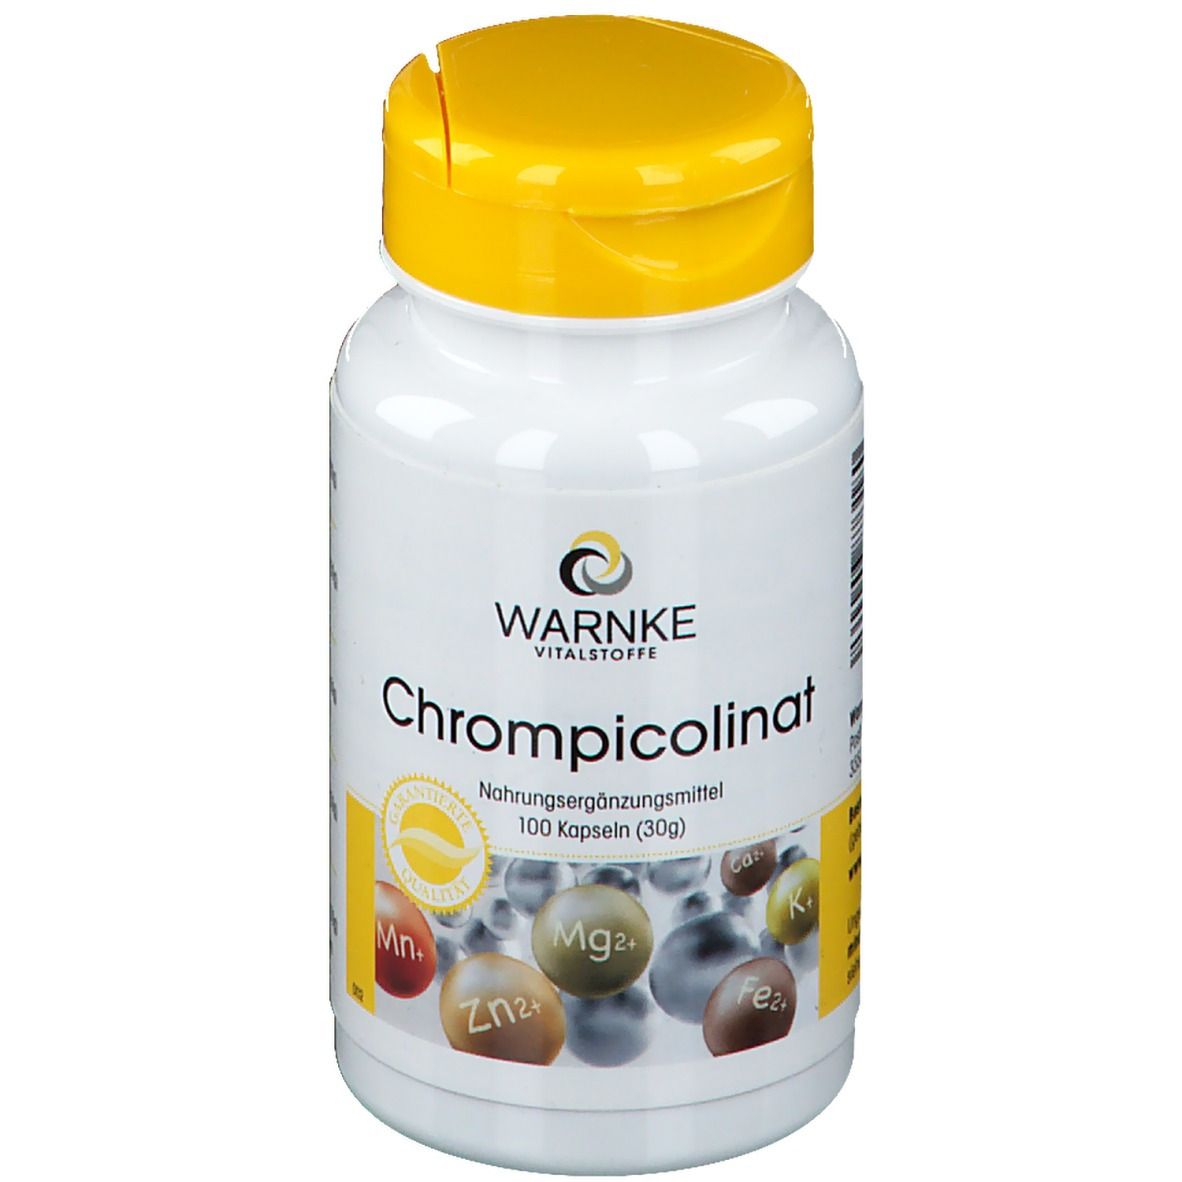 Image of WARNKE Chrompicolinat